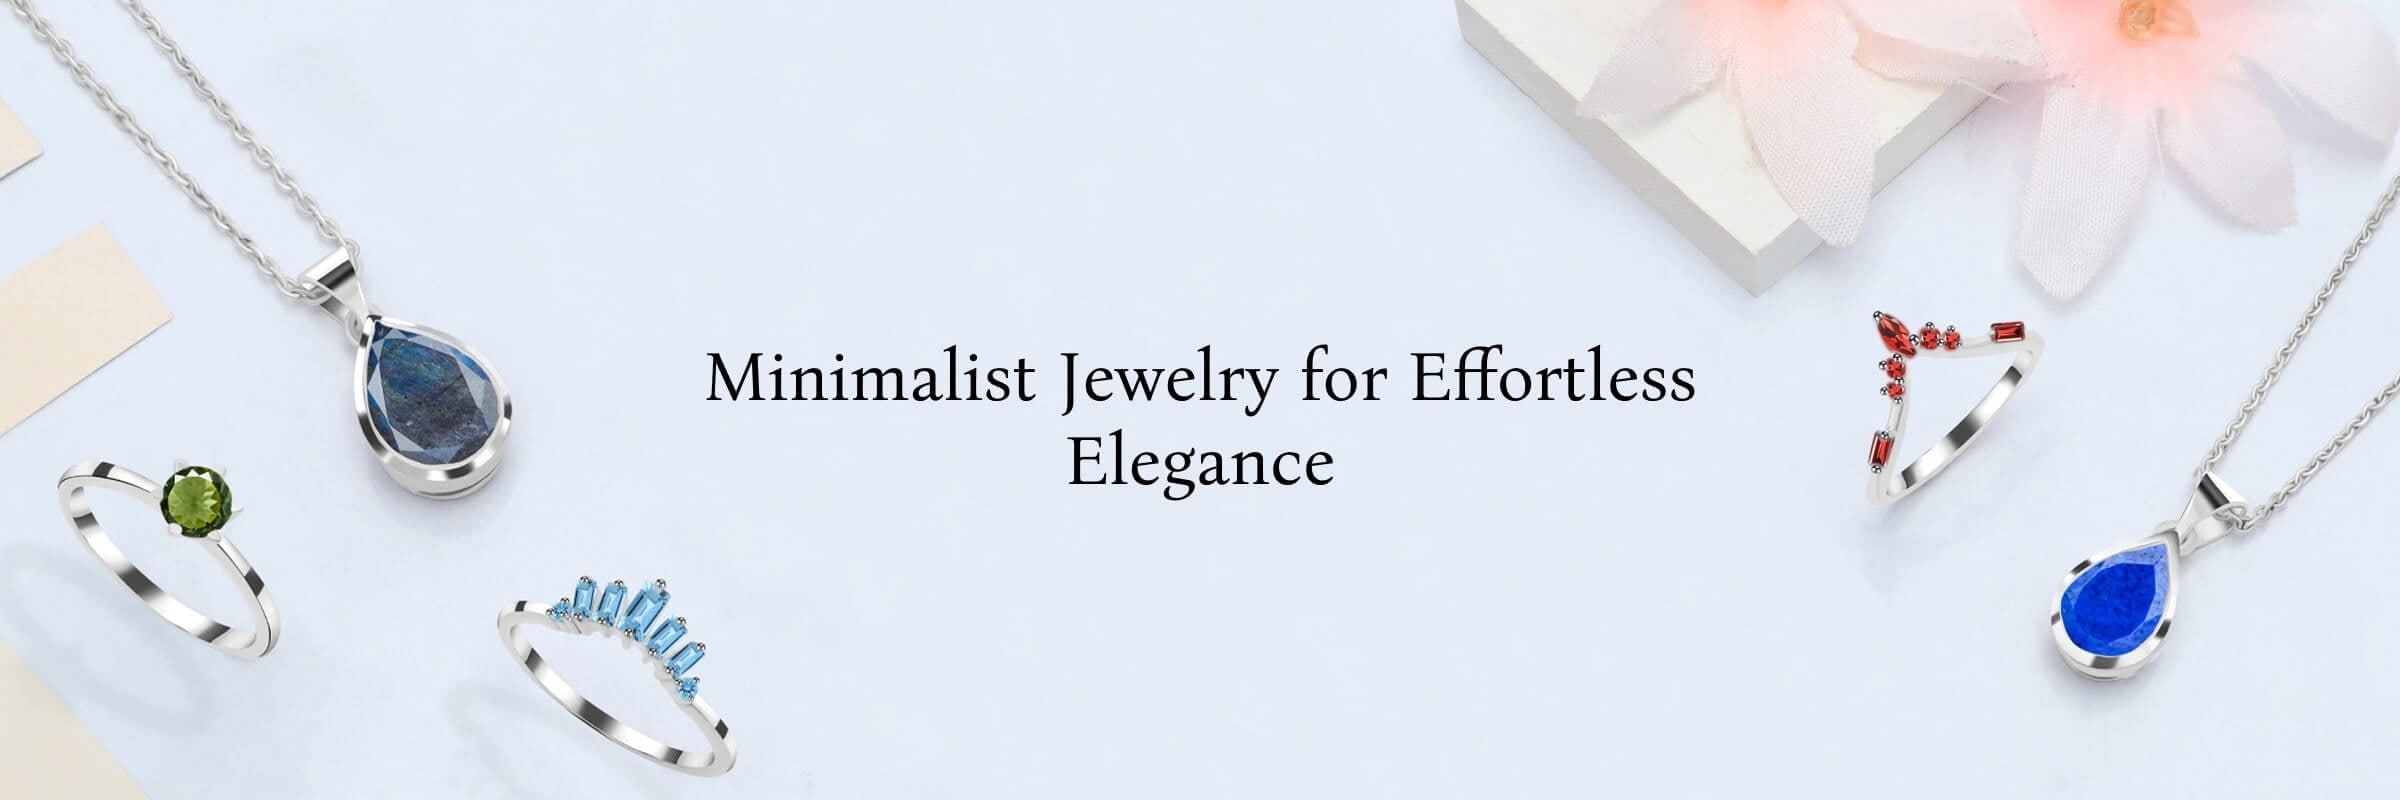 Embracing Minimalist Jewelry in Everyday Fashion